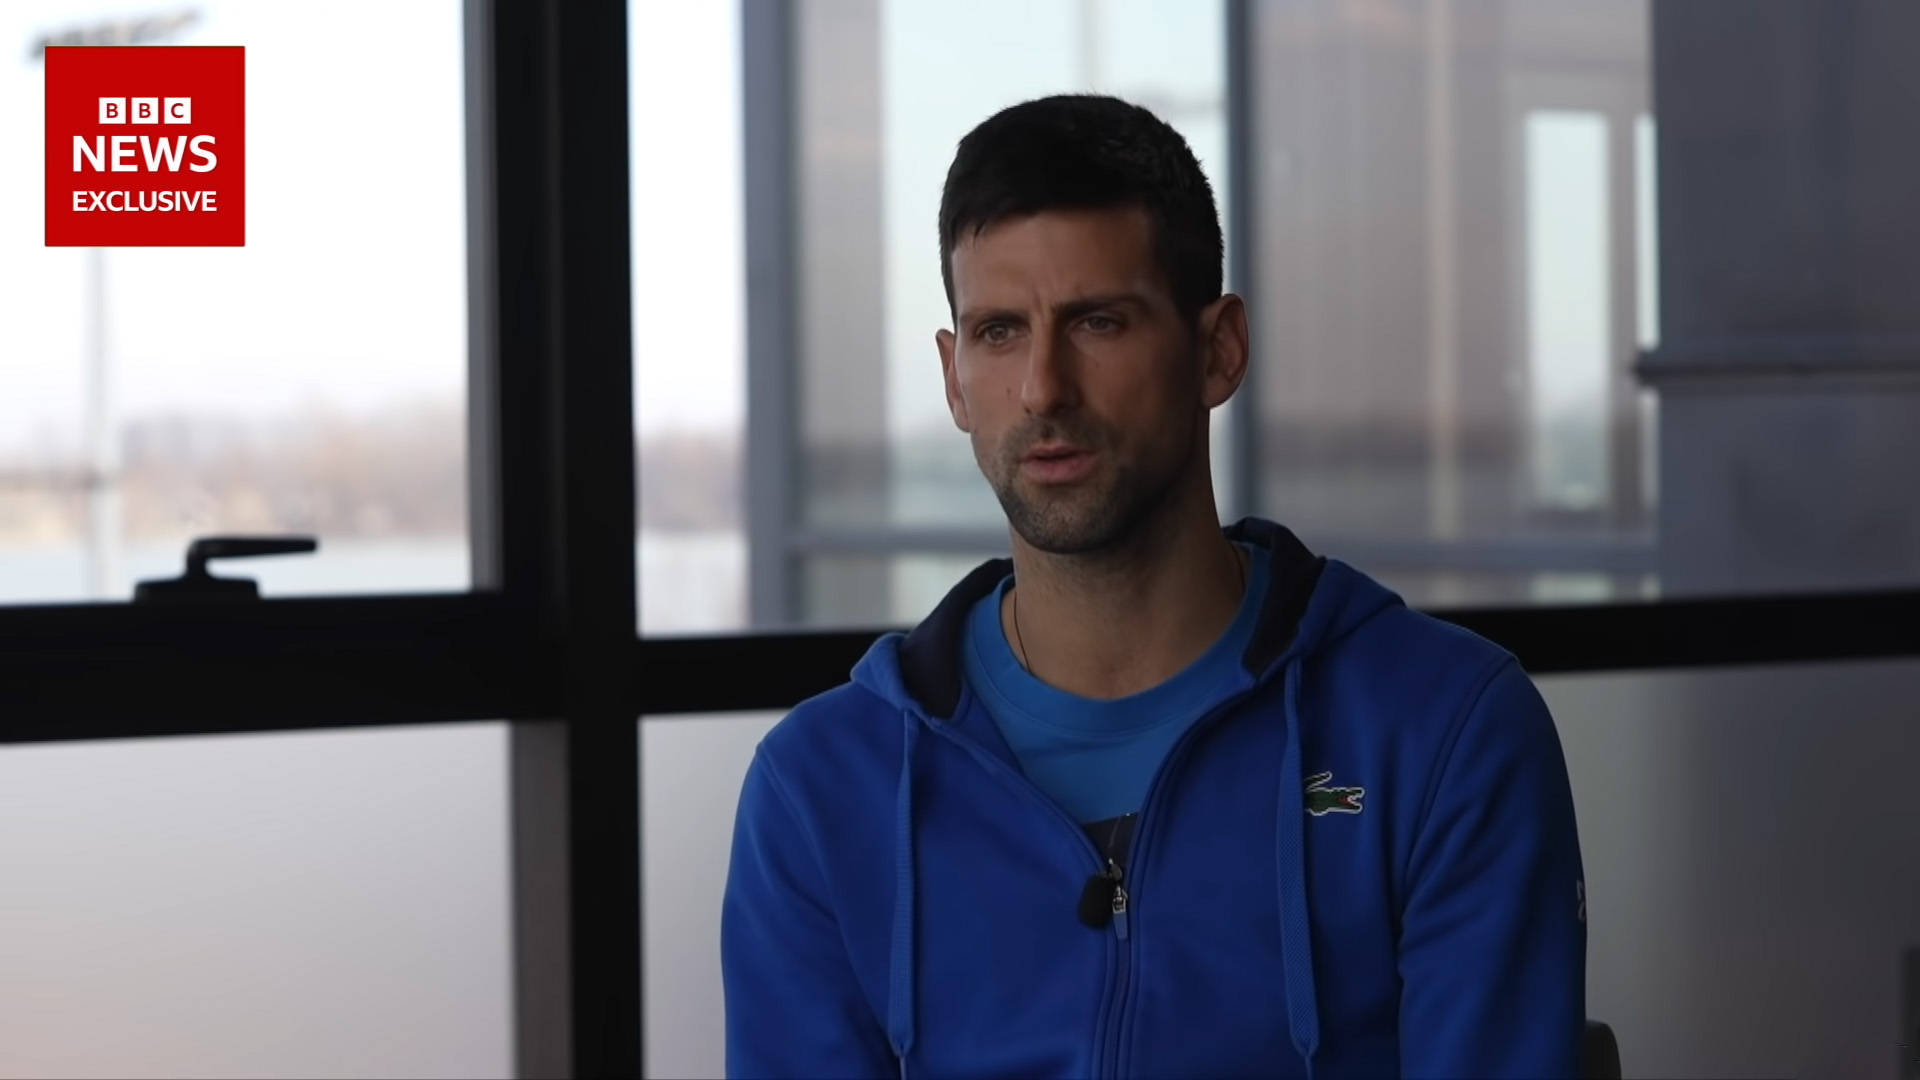 Novak Djokovic Bbc News Interview Background